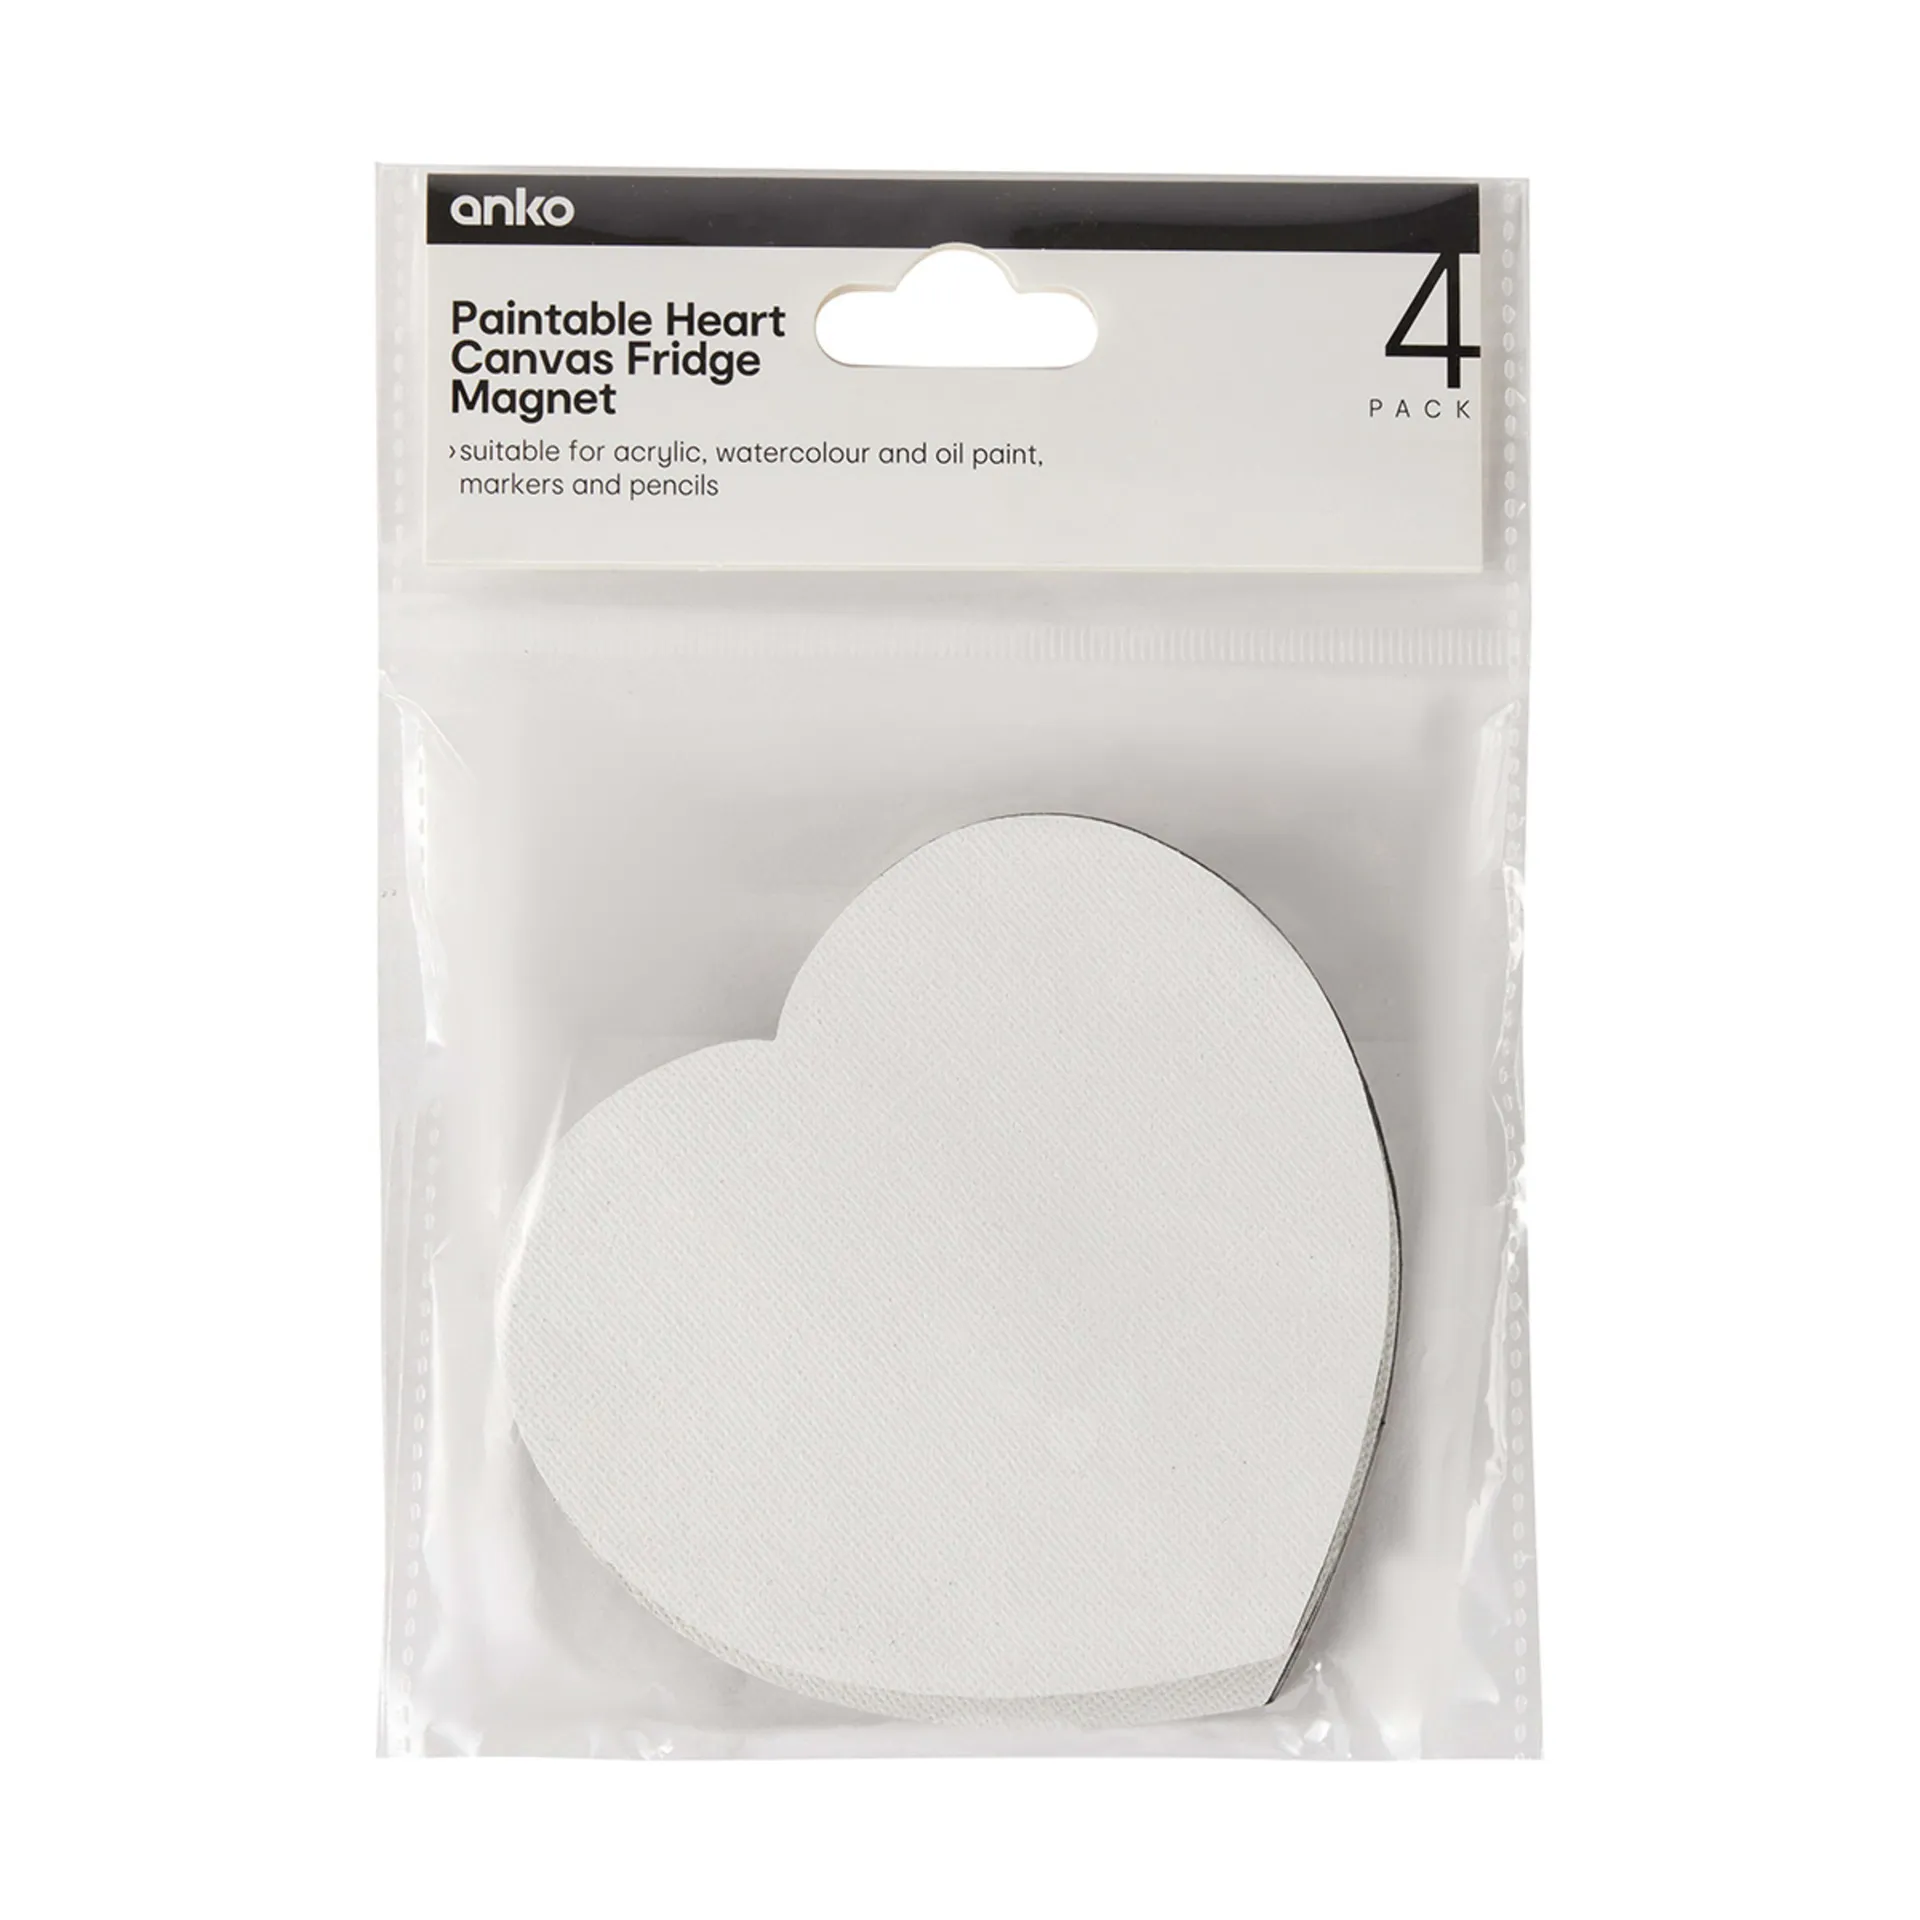 4 Pack Paintable Heart Canvas Fridge Magnets